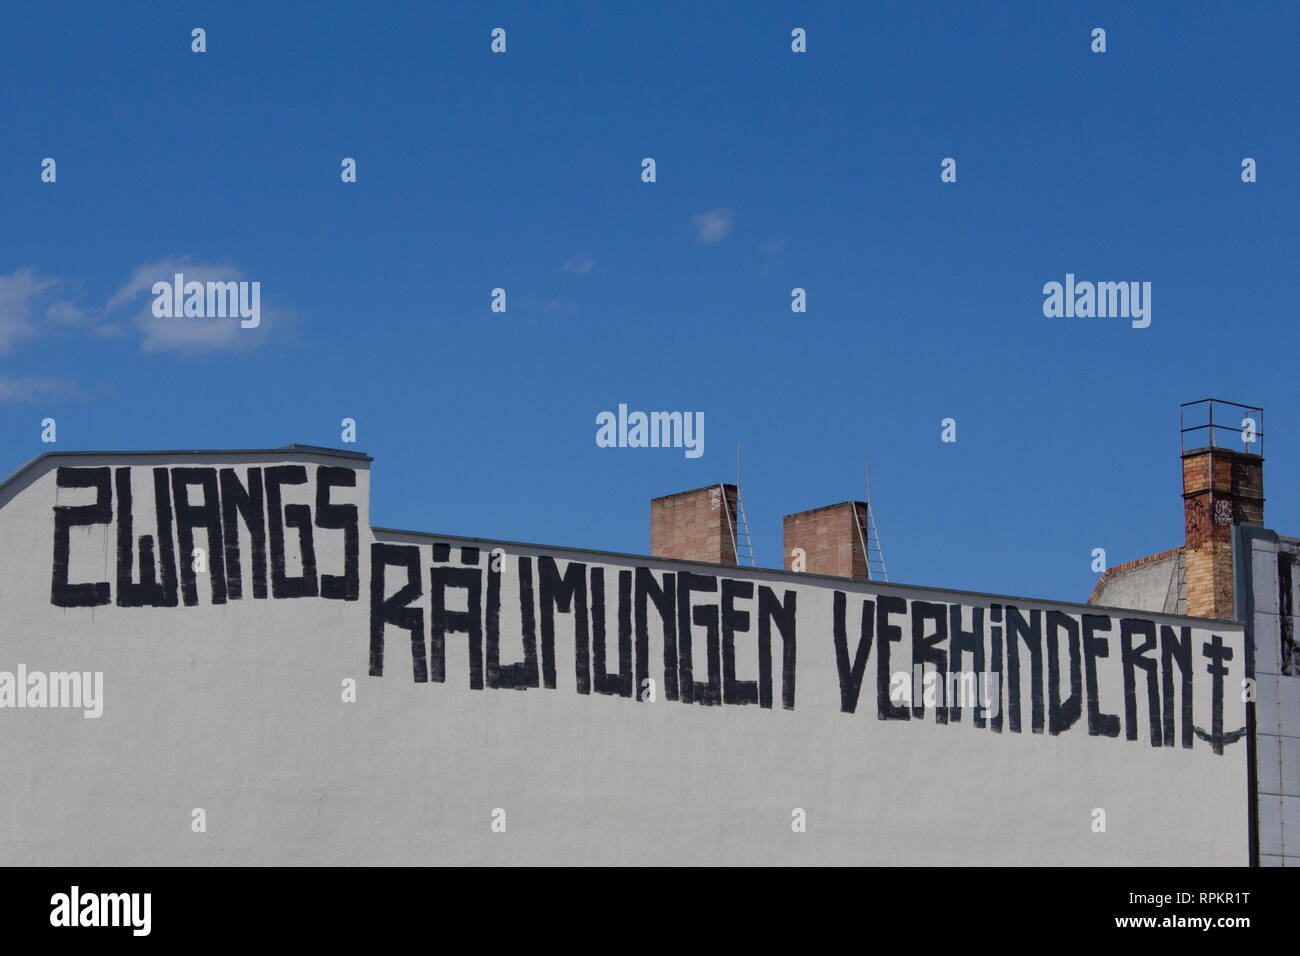 Berlin, Germany - June 14, 2016: 'Stop evictions' (german: Zwangsraeumung verhindern) graffiti on building facade in Berlin, Germany. Stock Photo